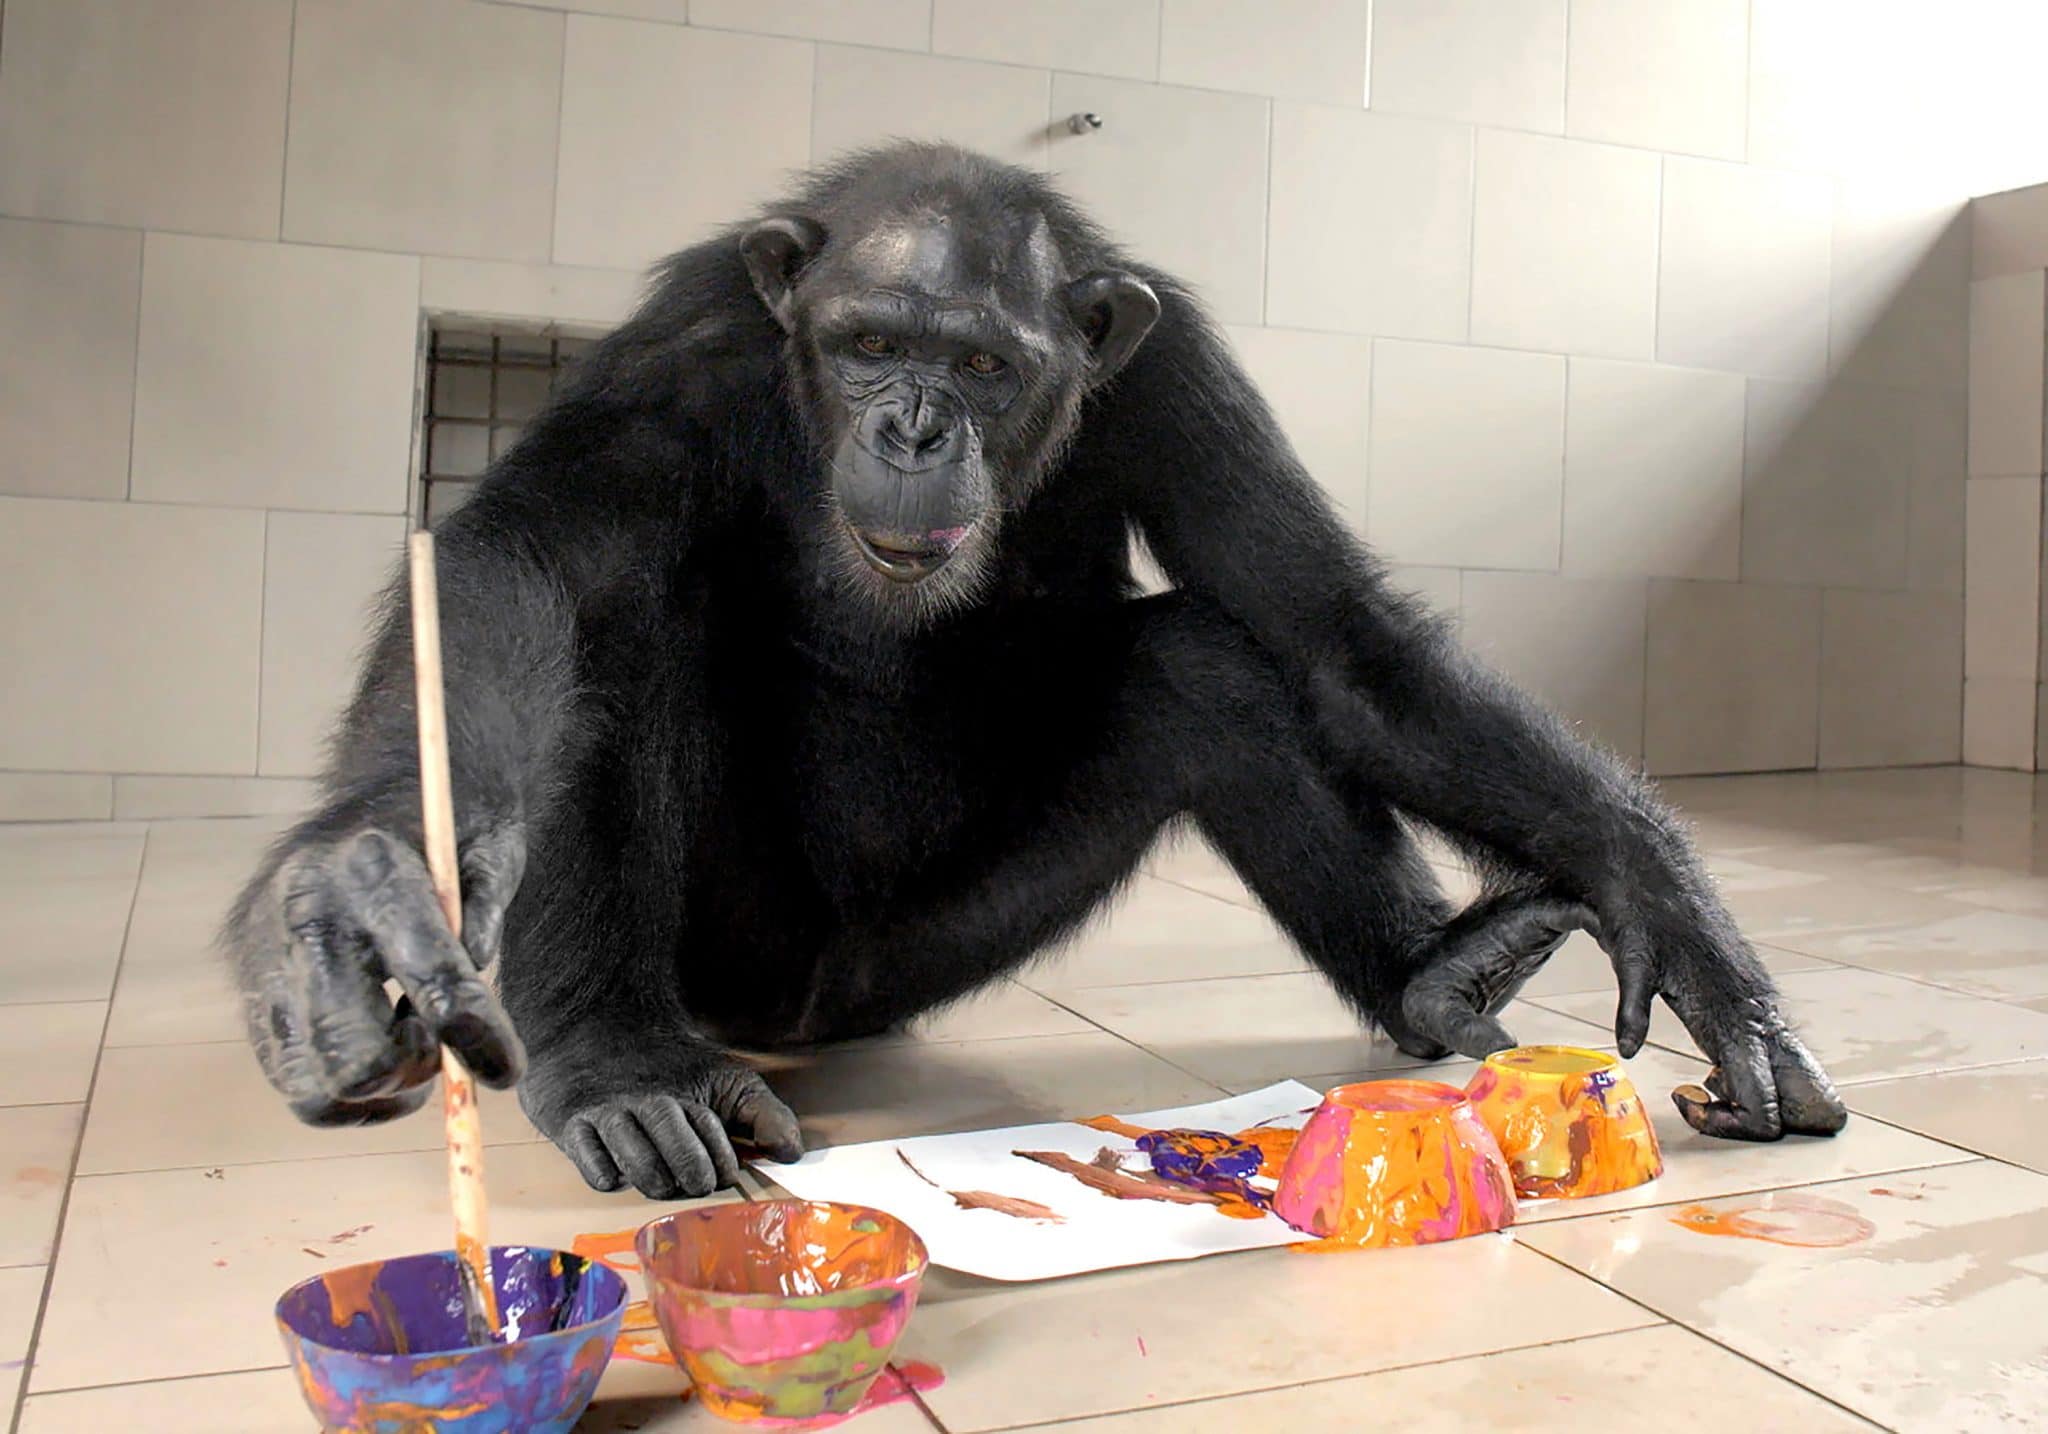 Chimp Amazon paints a picture as part of the enrichment program at Tchimpoounga. Courtesy of the Tchimpoounga Chimpanzee Rehabilitation Center and the Walt Disney Family Museum.